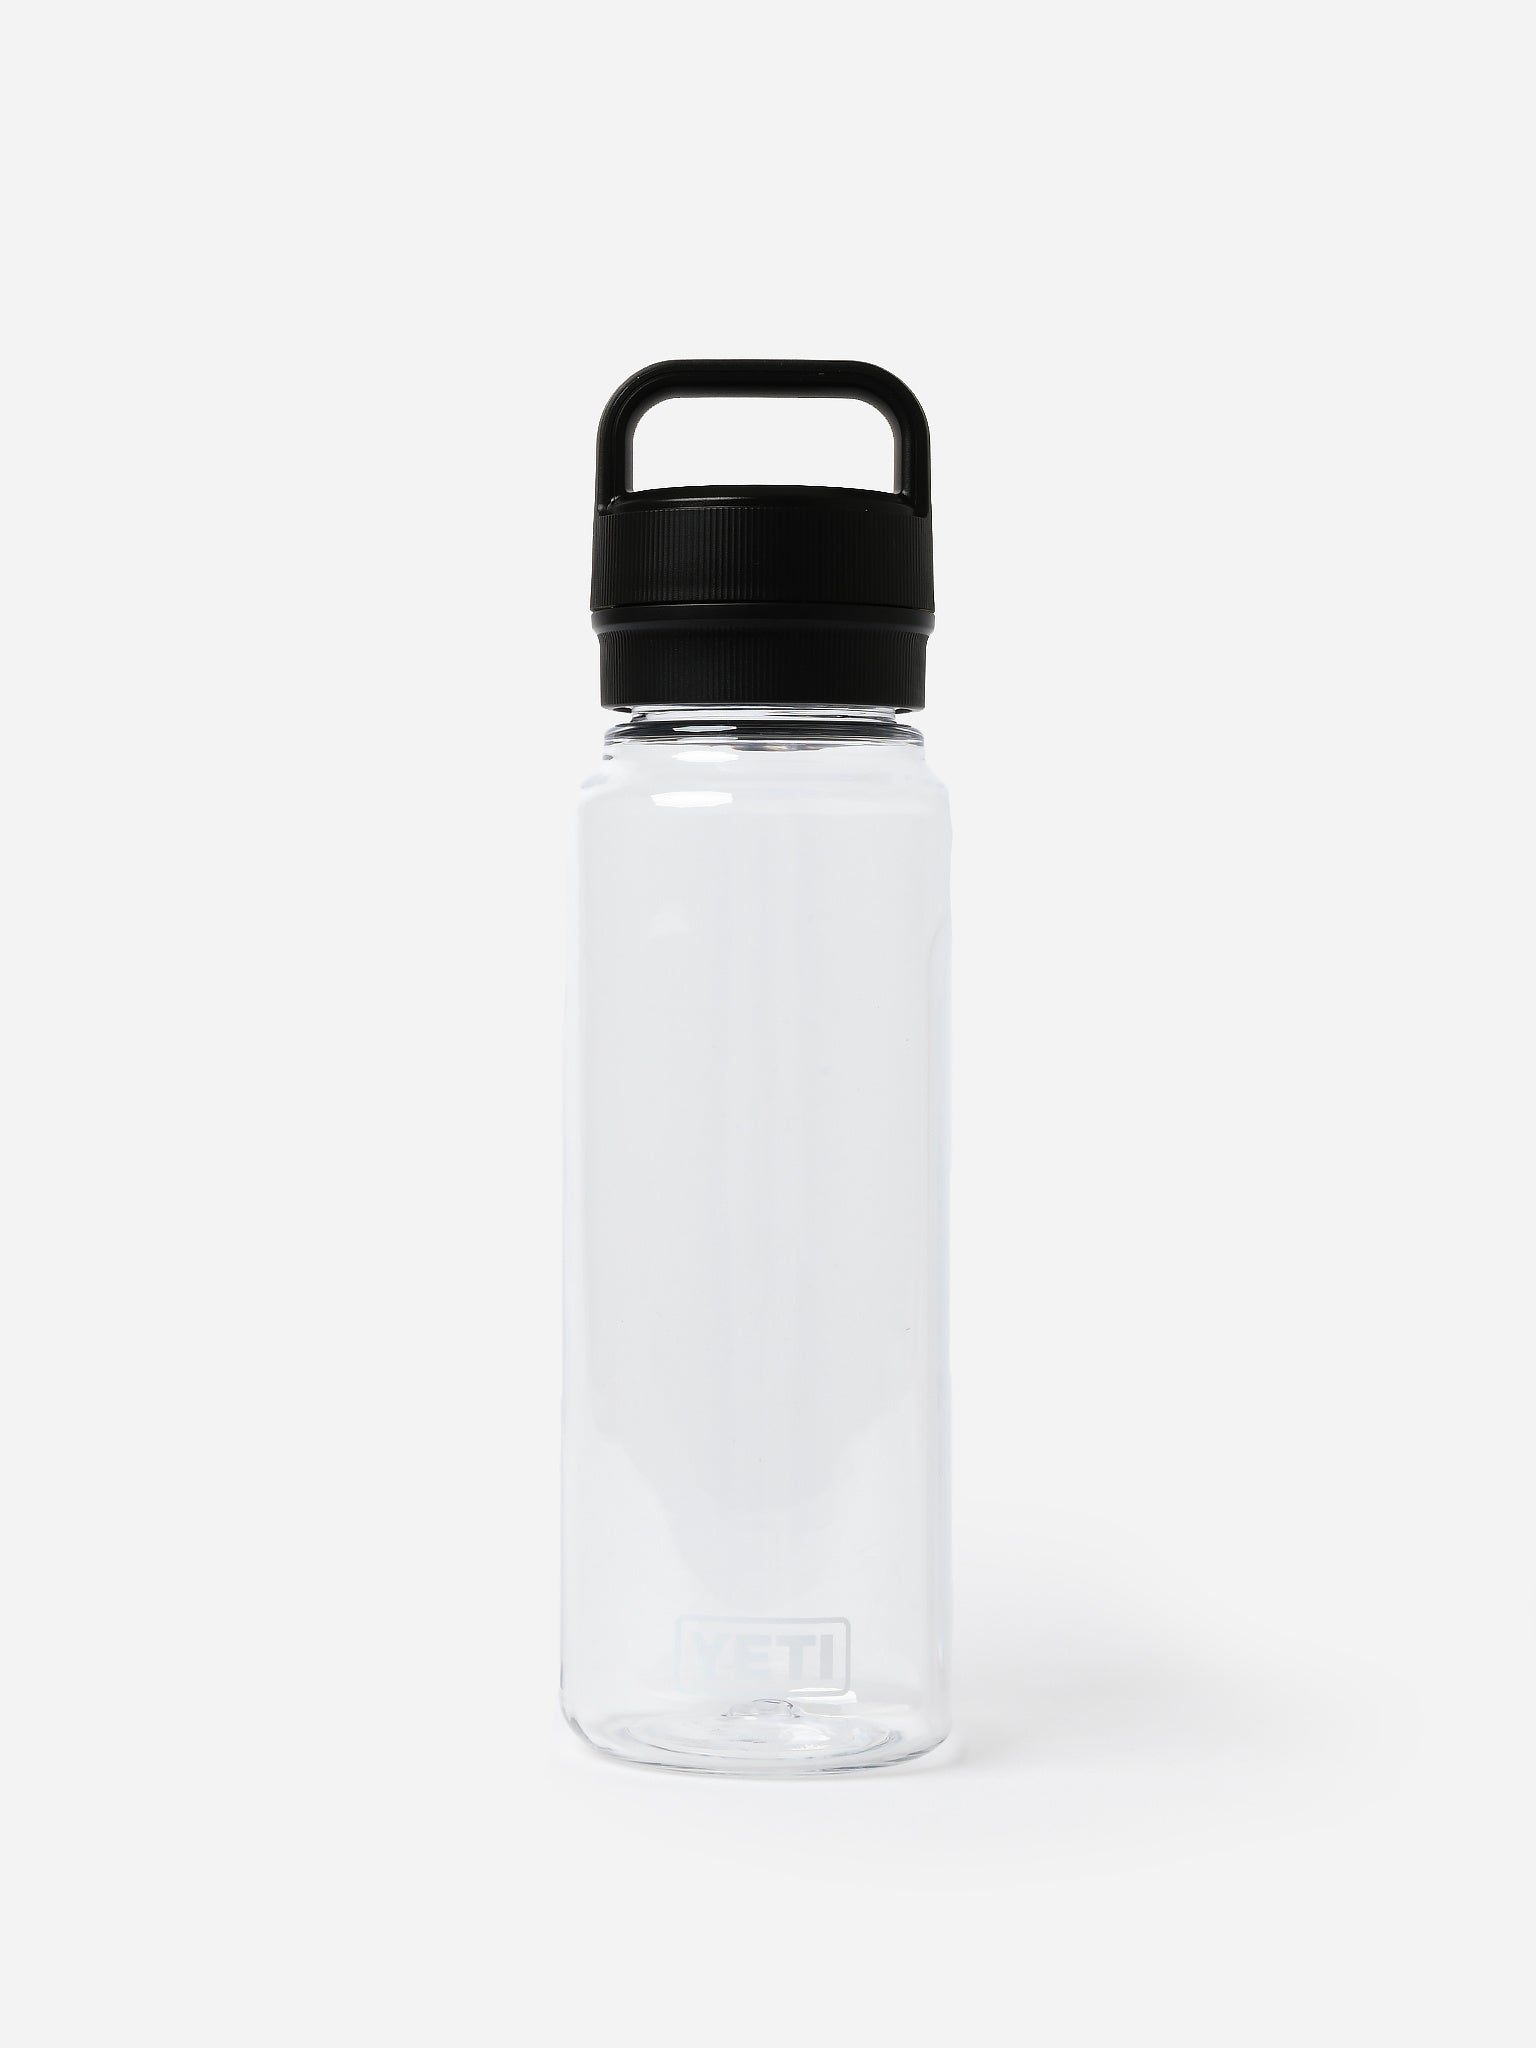 Yeti Yonder 25 oz. Water Bottle Clear